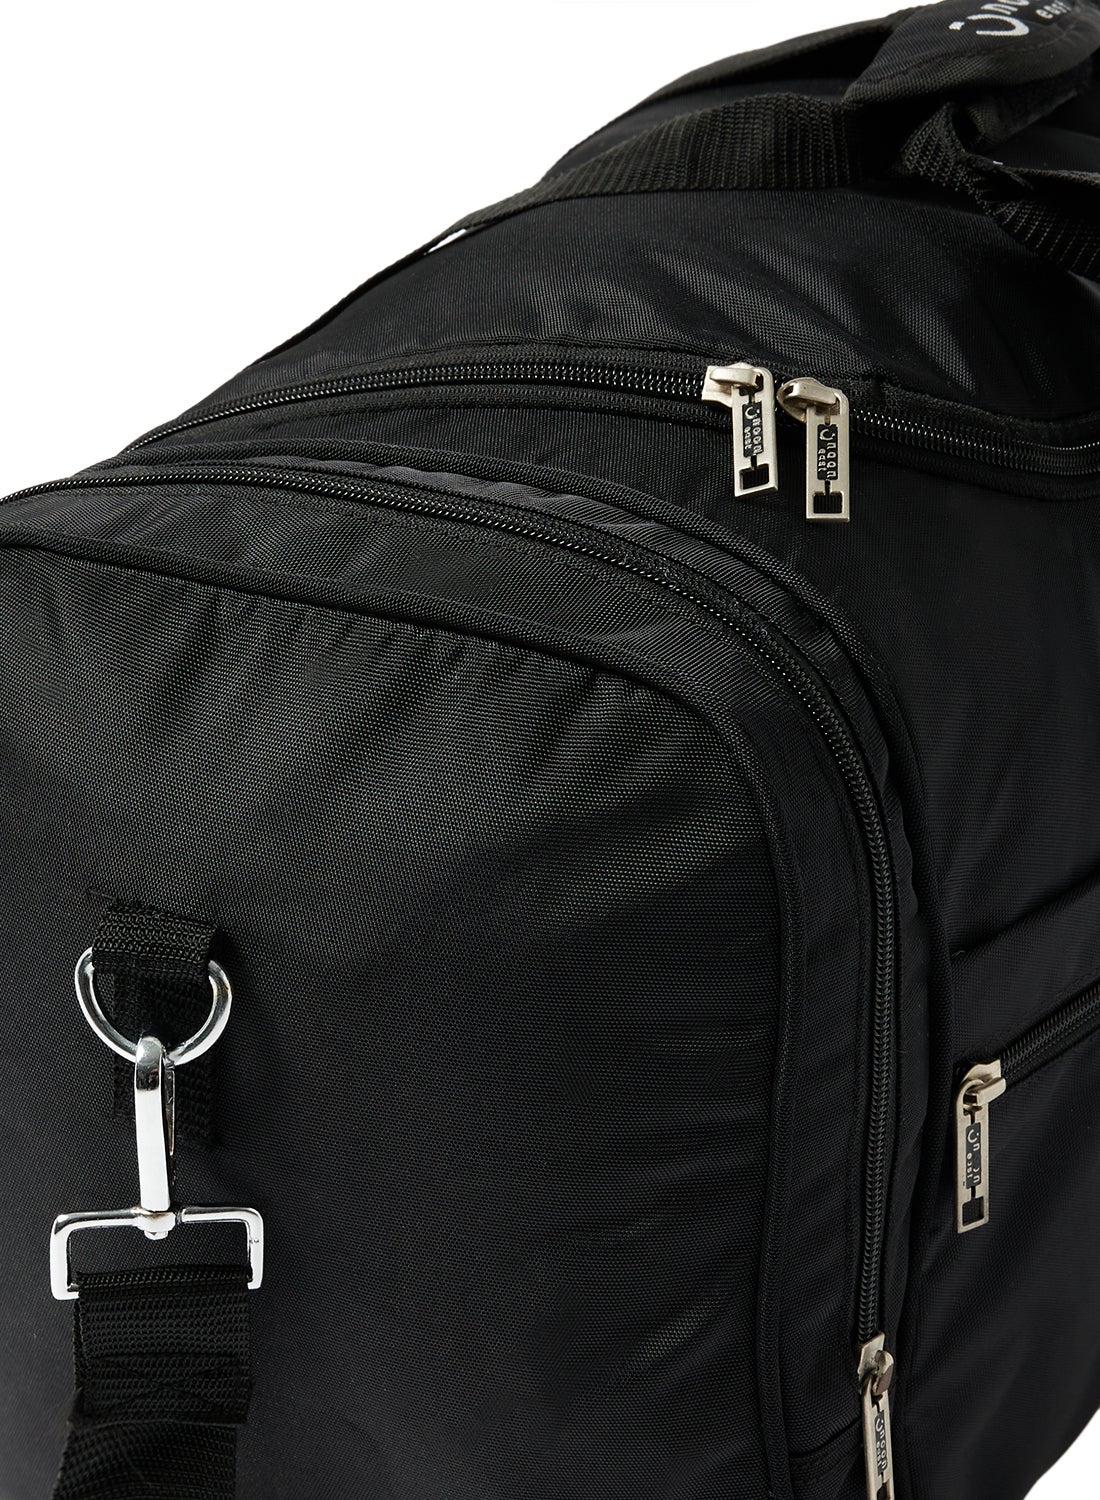 3-Piece Lightweight Waterproof Polyester Multipurpose Luggage Duffle Bag/Gym Bag Set 20/22/24 Inch Black 